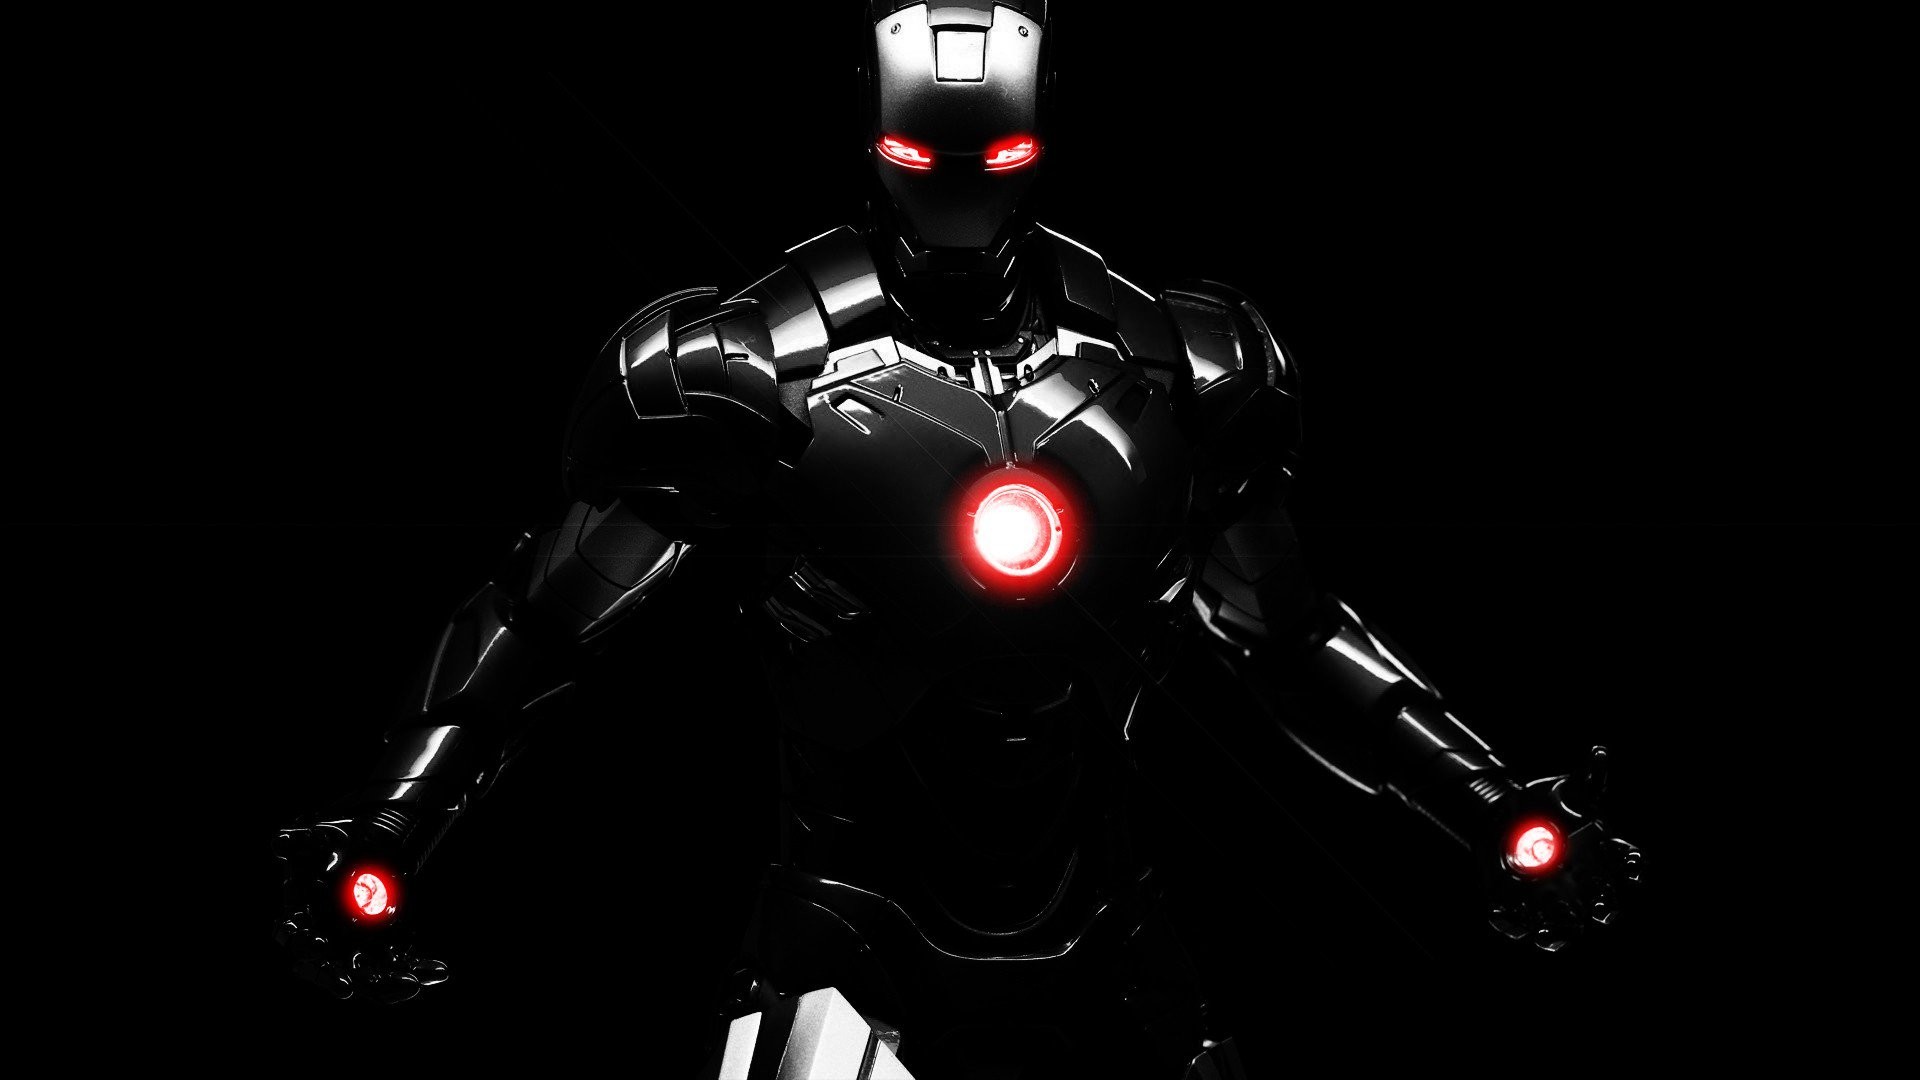 290955 blackangel 416035 iron man super hero superheroes marvel hd wallpaper 1696760 black iron man background picture new best hd